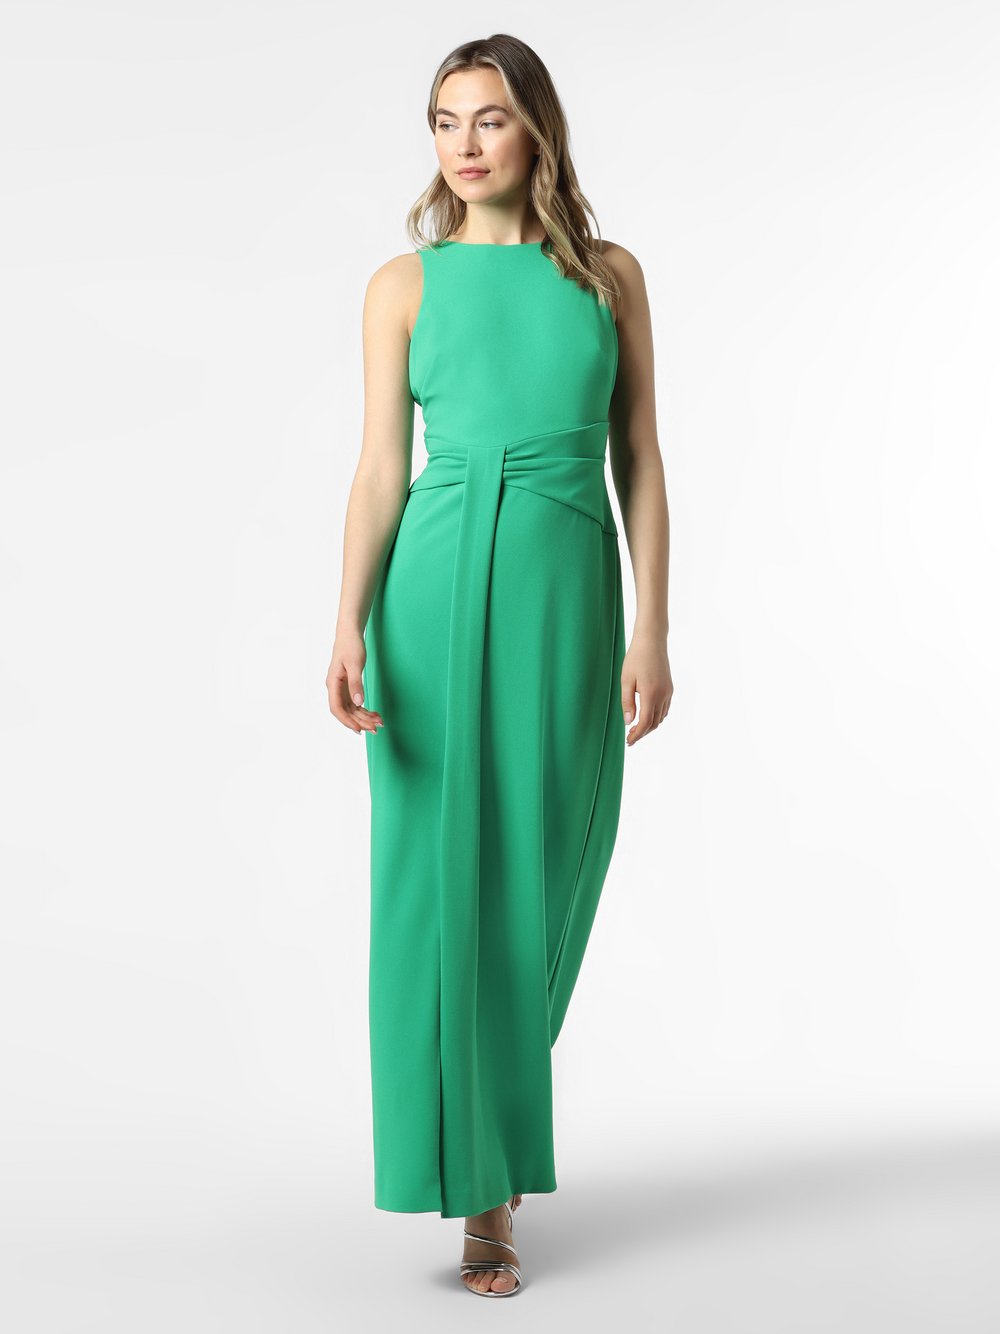 Lauren Ralph Lauren - Damska sukienka wieczorowa, zielony